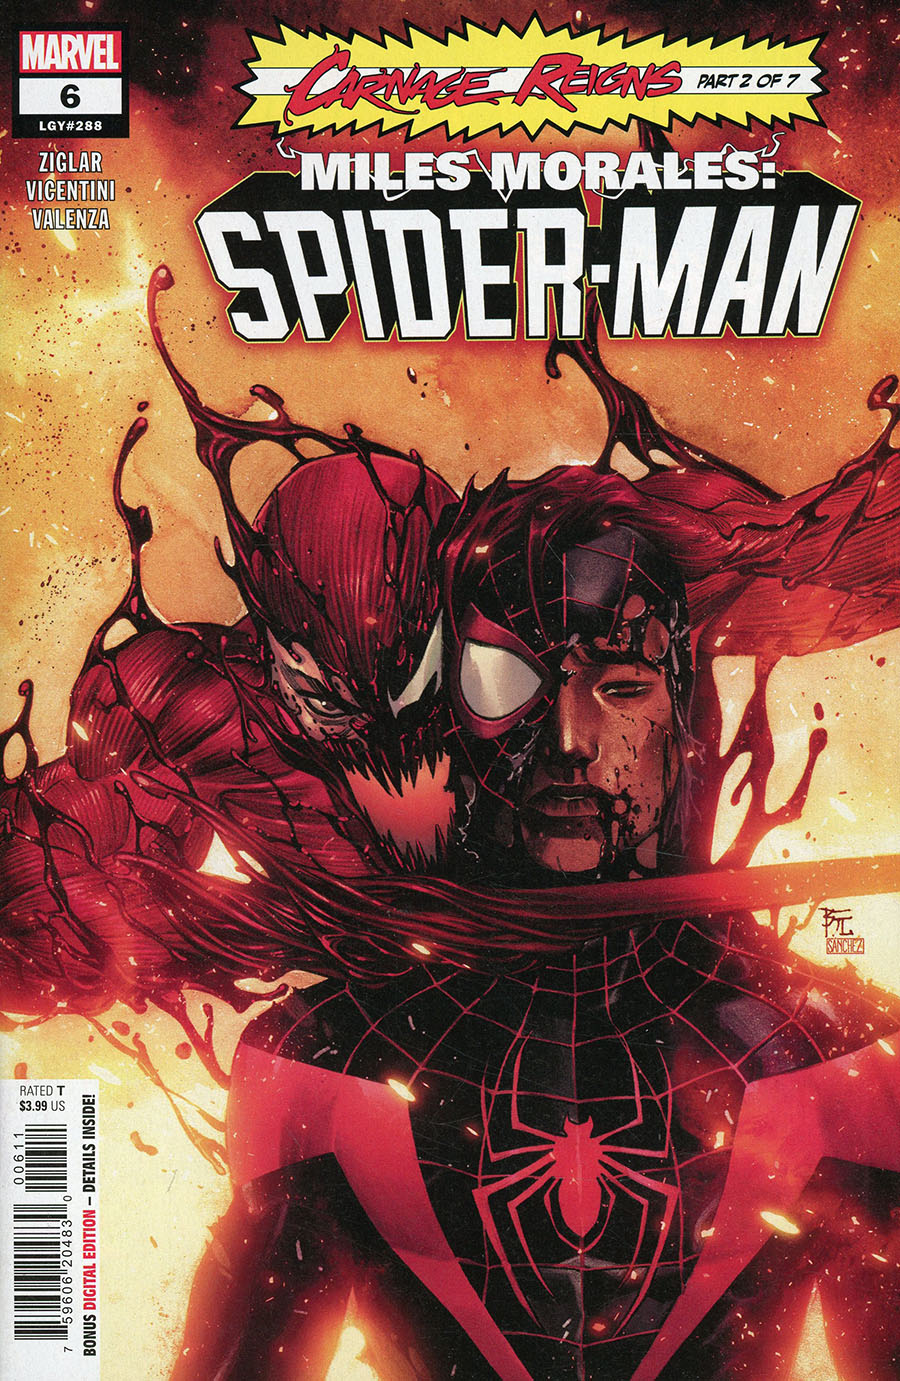 Miles Morales Spider-Man Vol 2 #6 Cover A Regular Dike Ruan Cover (Carnage Reigns Part 2)